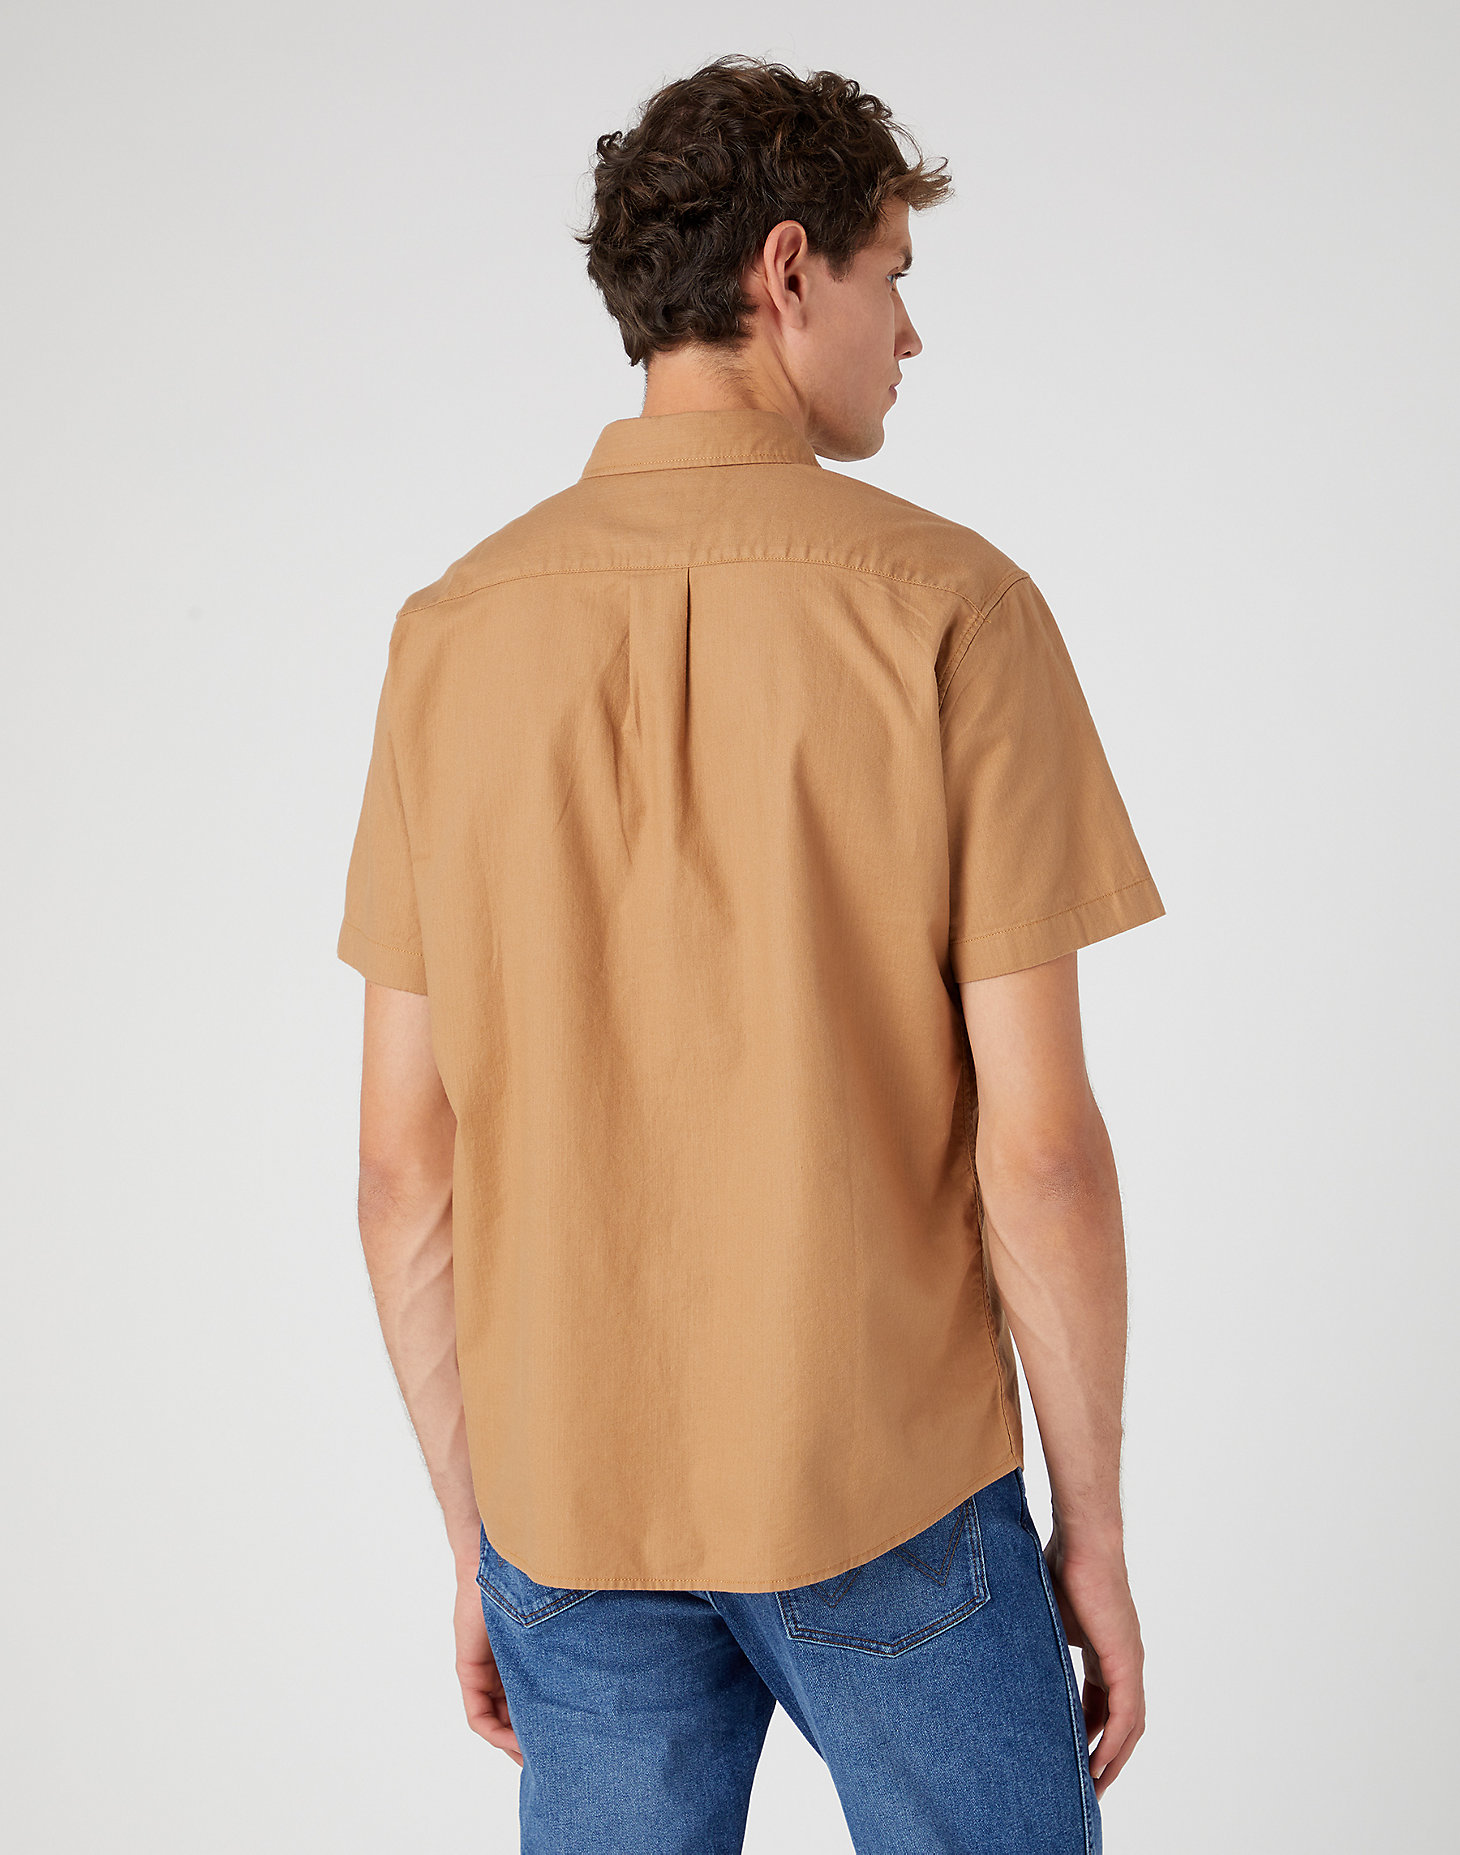 Short Sleeve 1 Pocket Shirt in Tobacco Brown alternative view 2